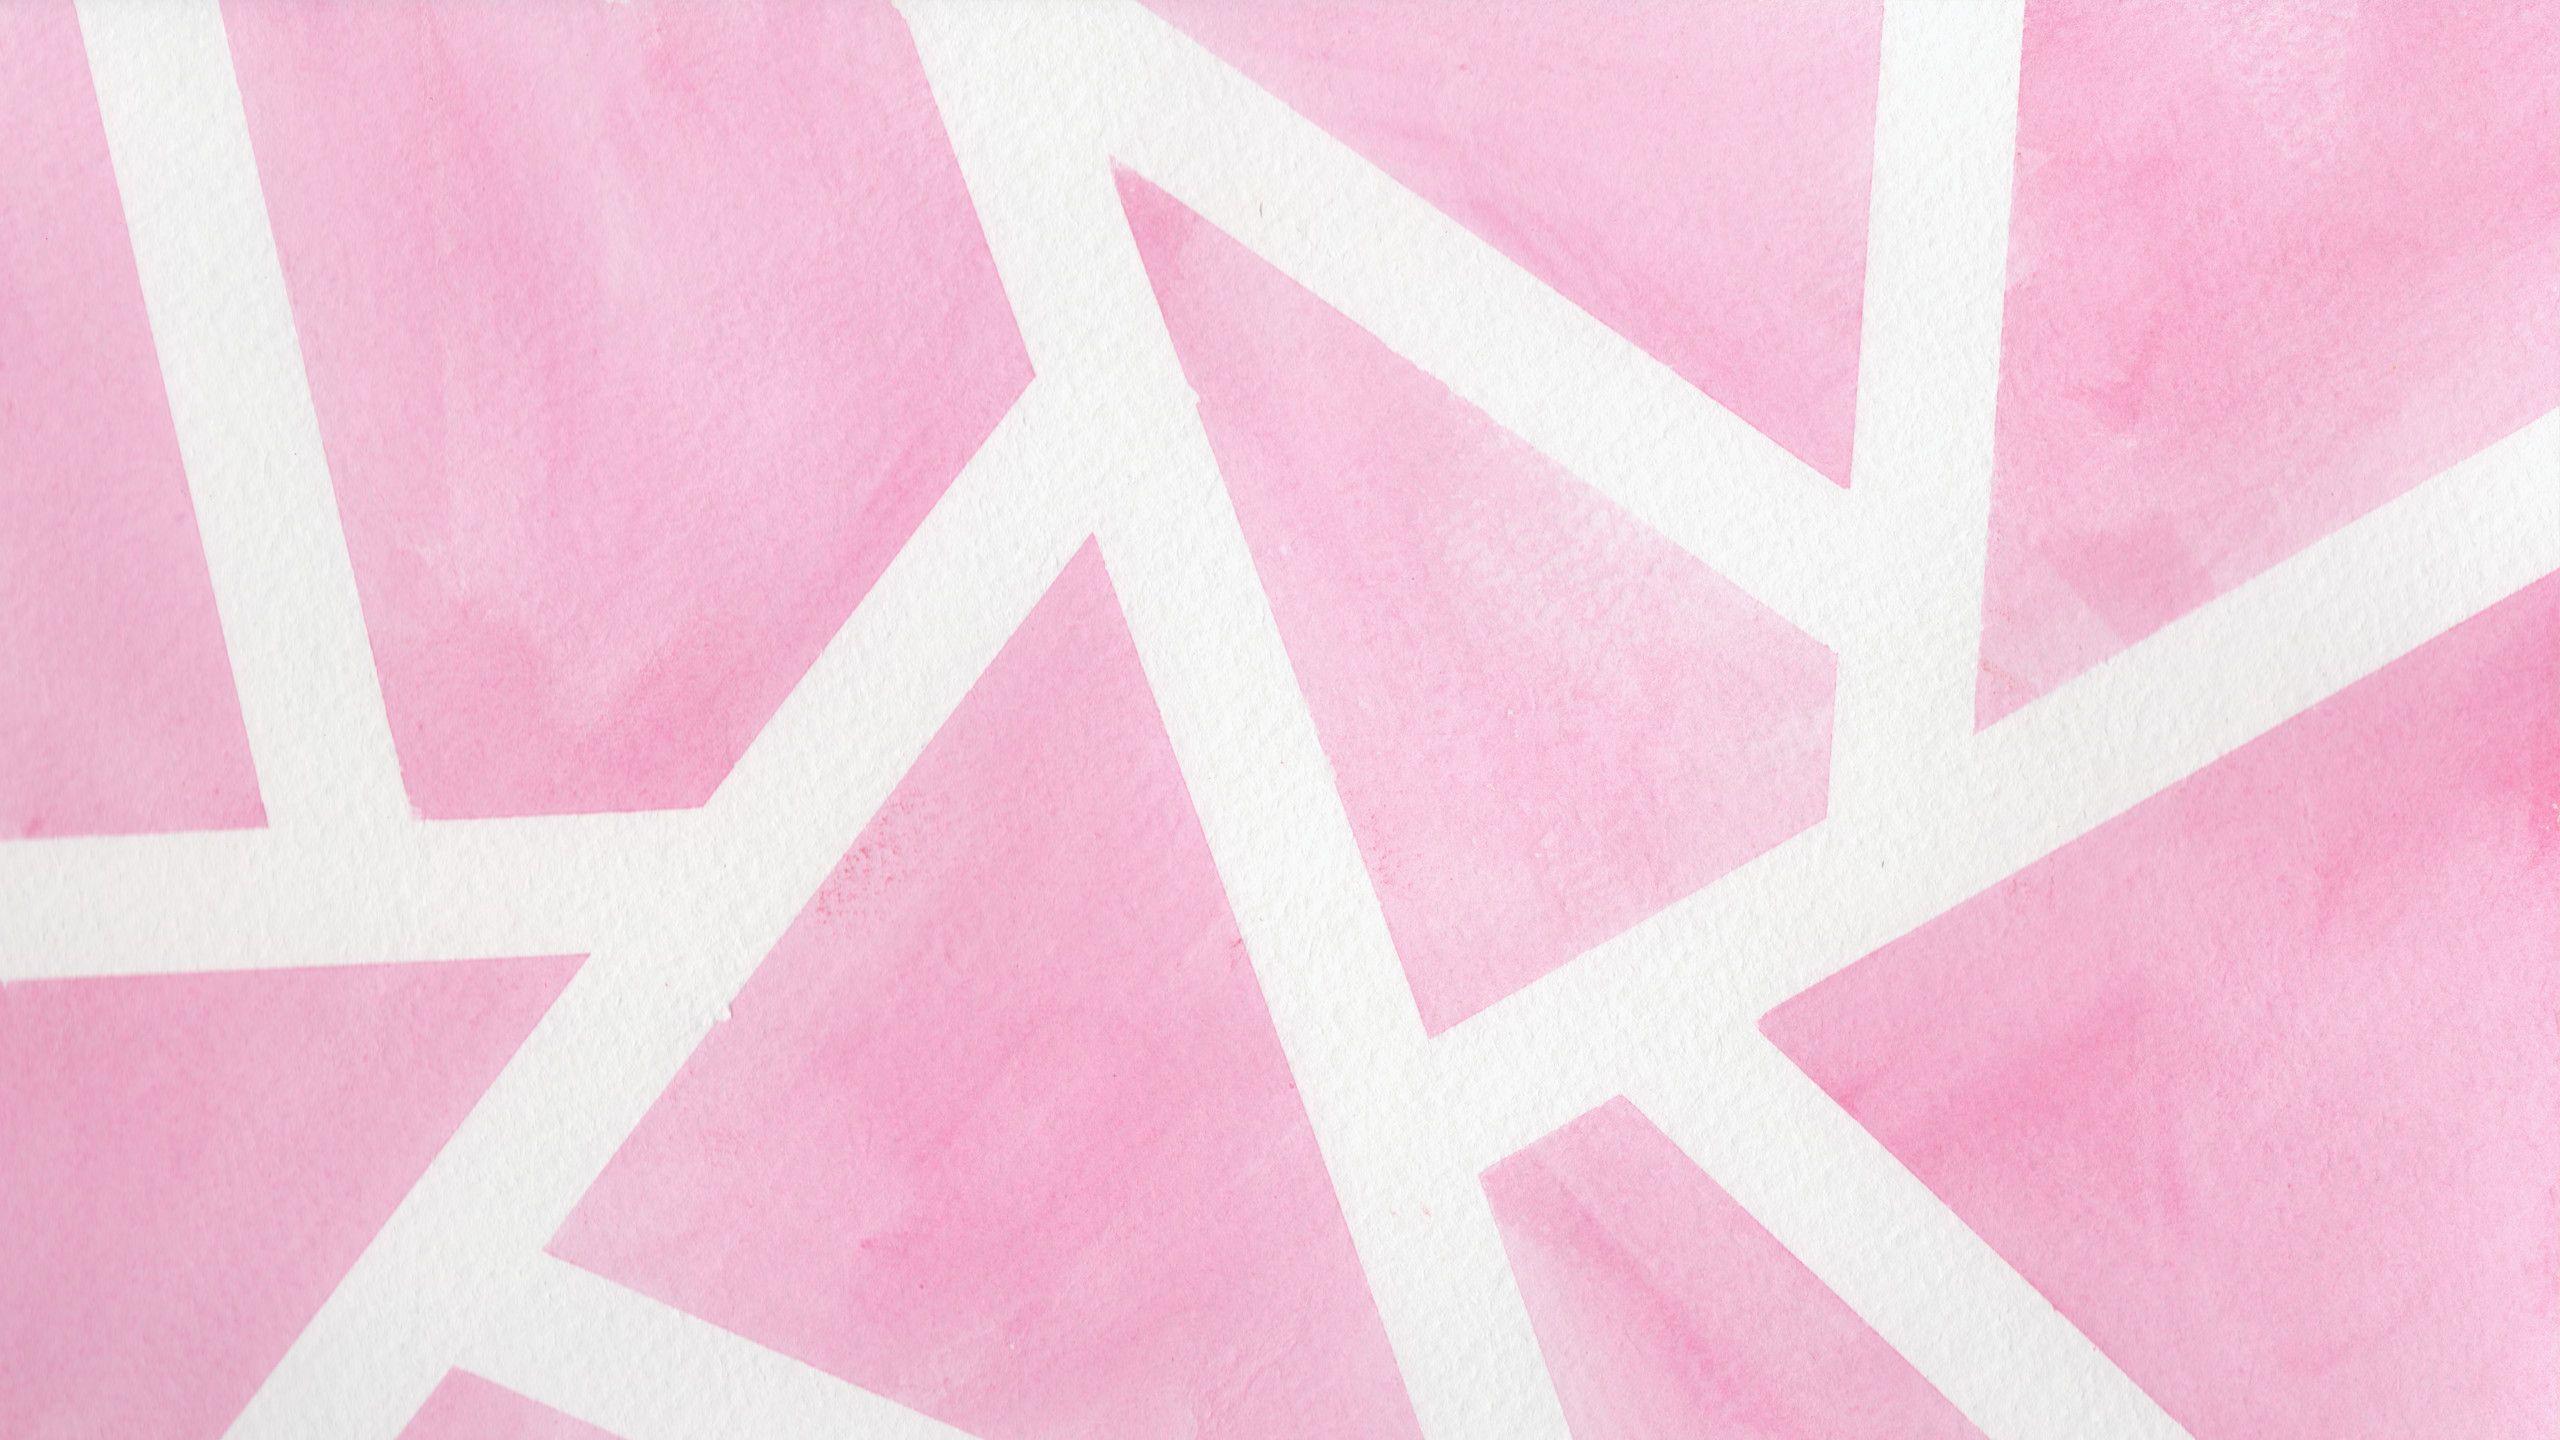 2560x1440 Pinterest Pink Aesthetic Wallpaper Desktop